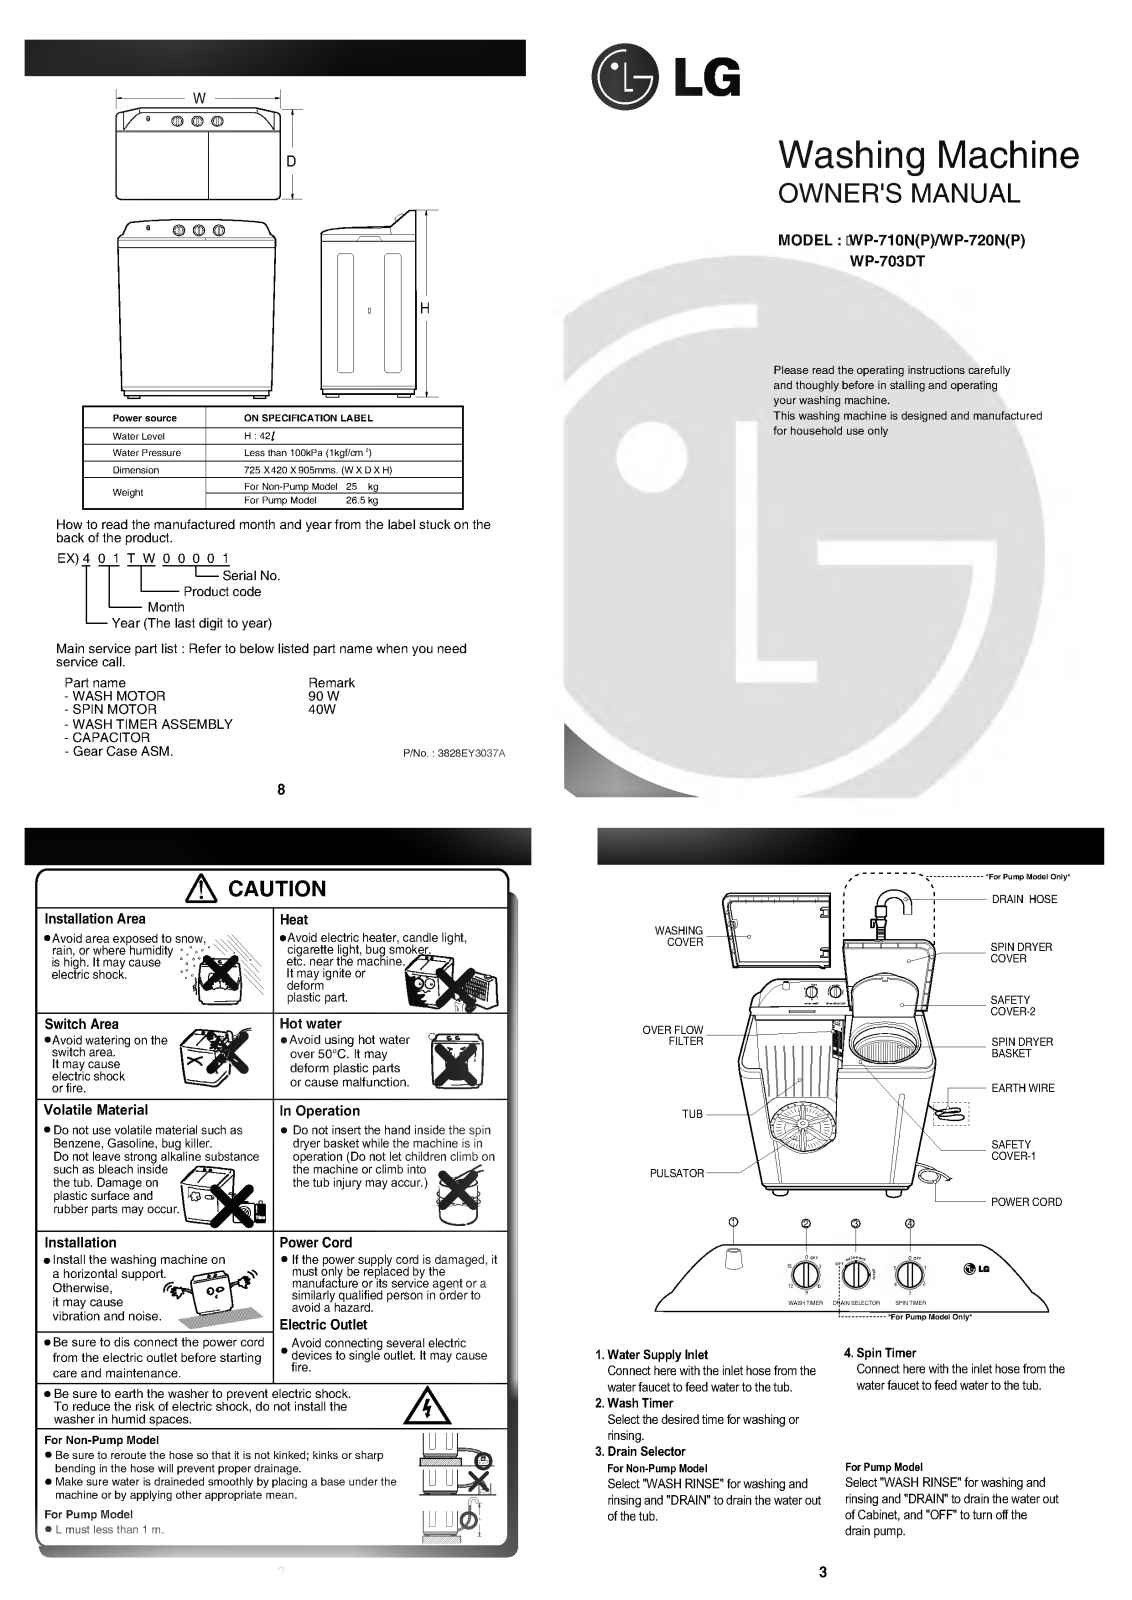 LG WP-720N Owner’s Manual